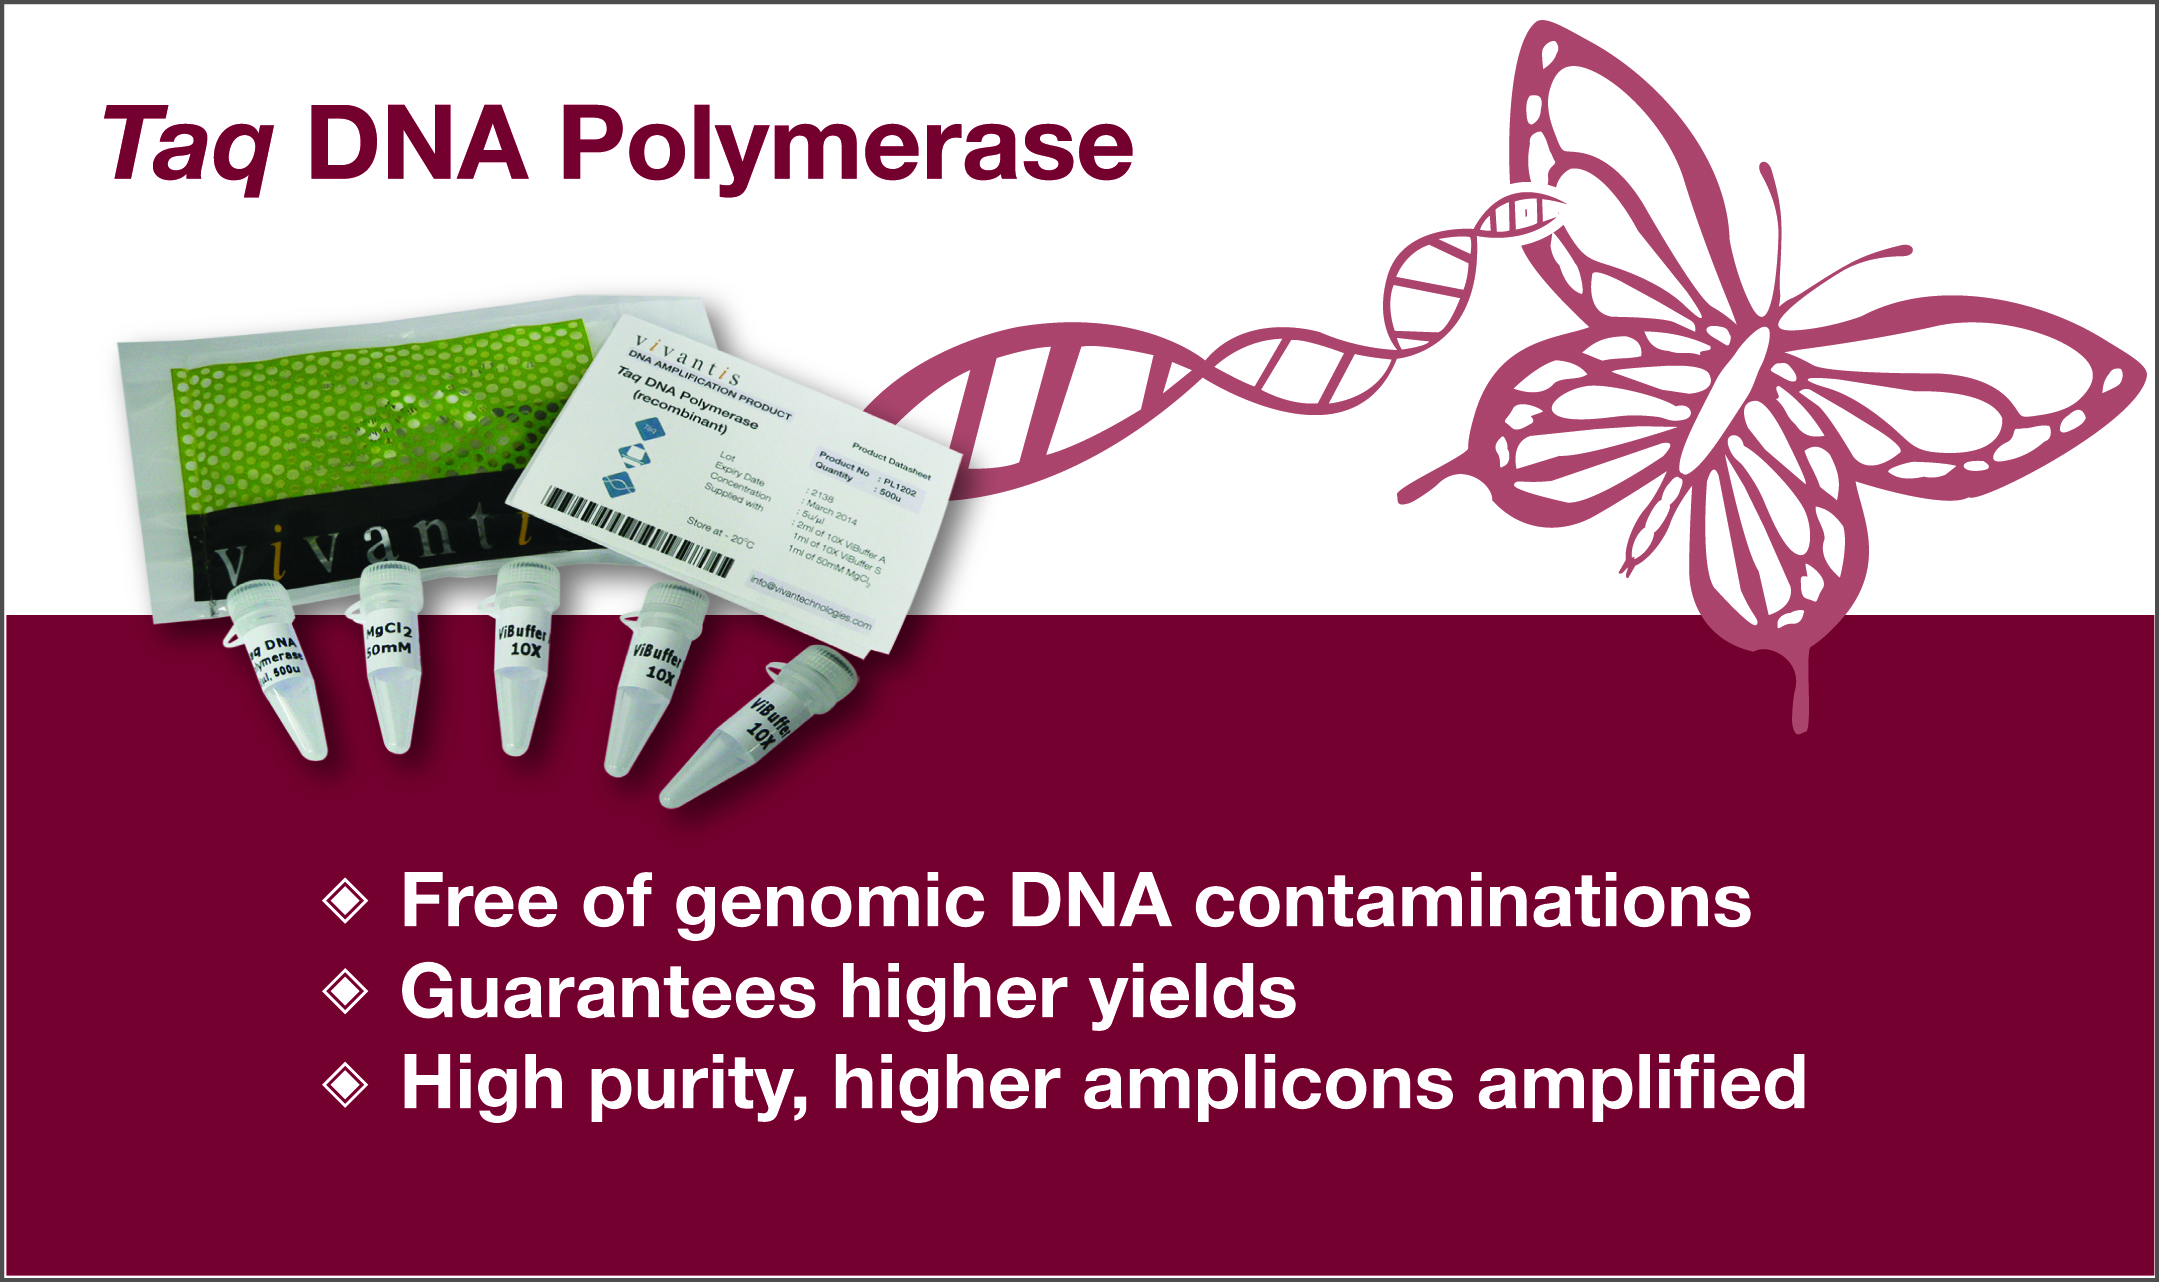  Taq DNA Polymerase